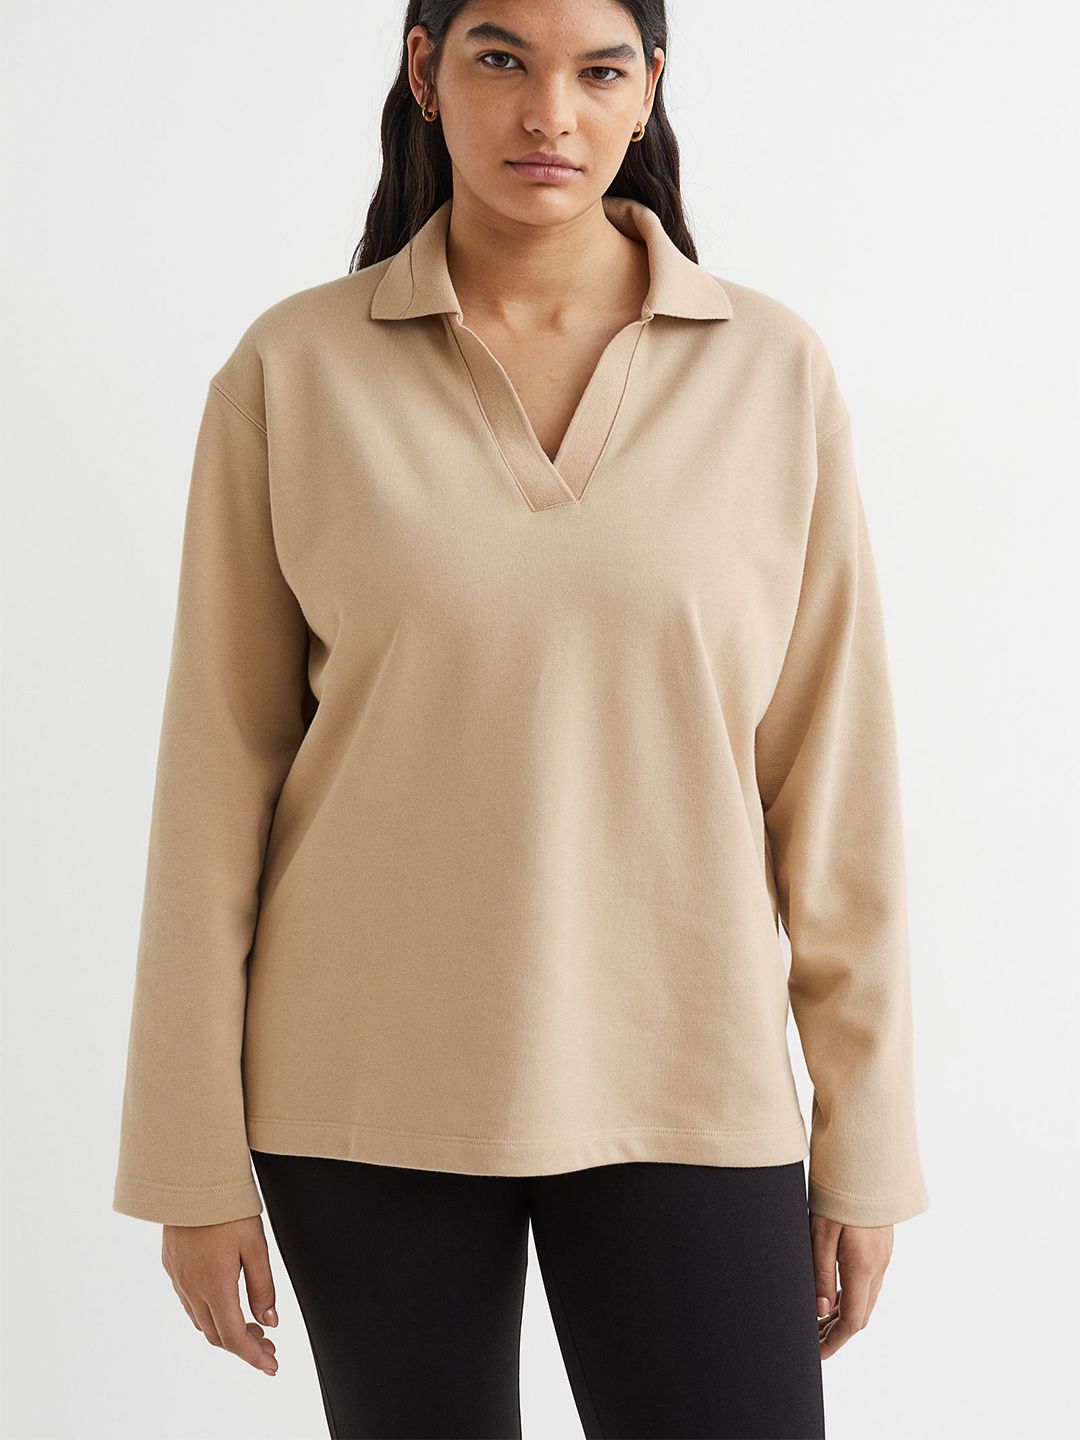 H&M Women Beige Solid Collared Sweatshirt Price in India